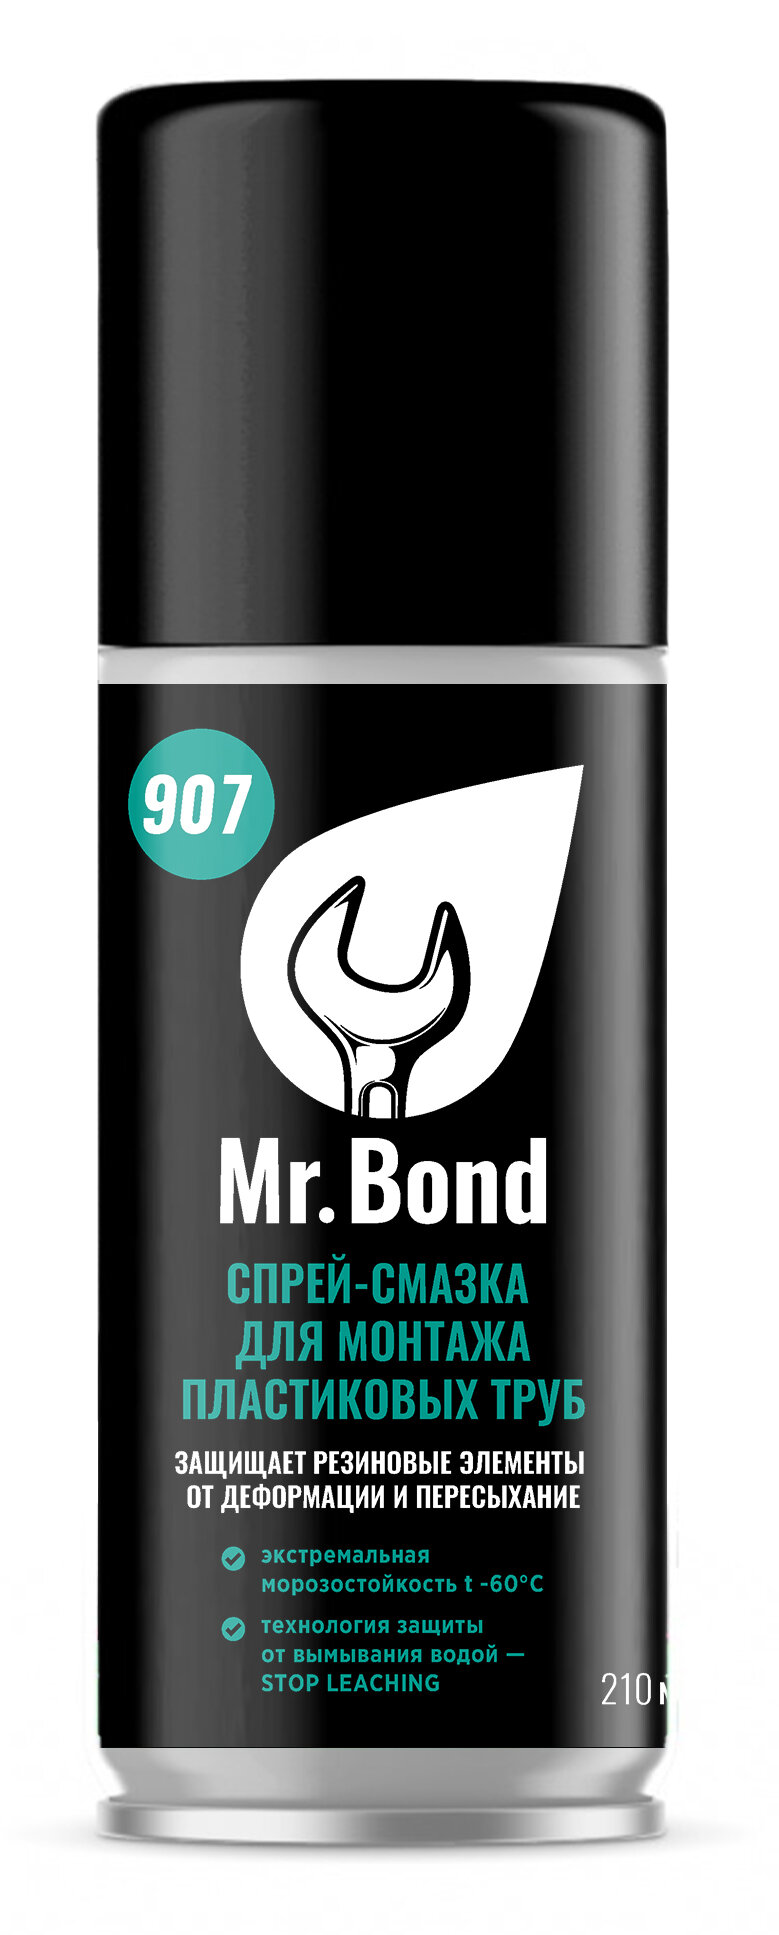 Спрей- смазка для монтажа пластиковых труб ПВХ Mr. Bond® 907 210мл.